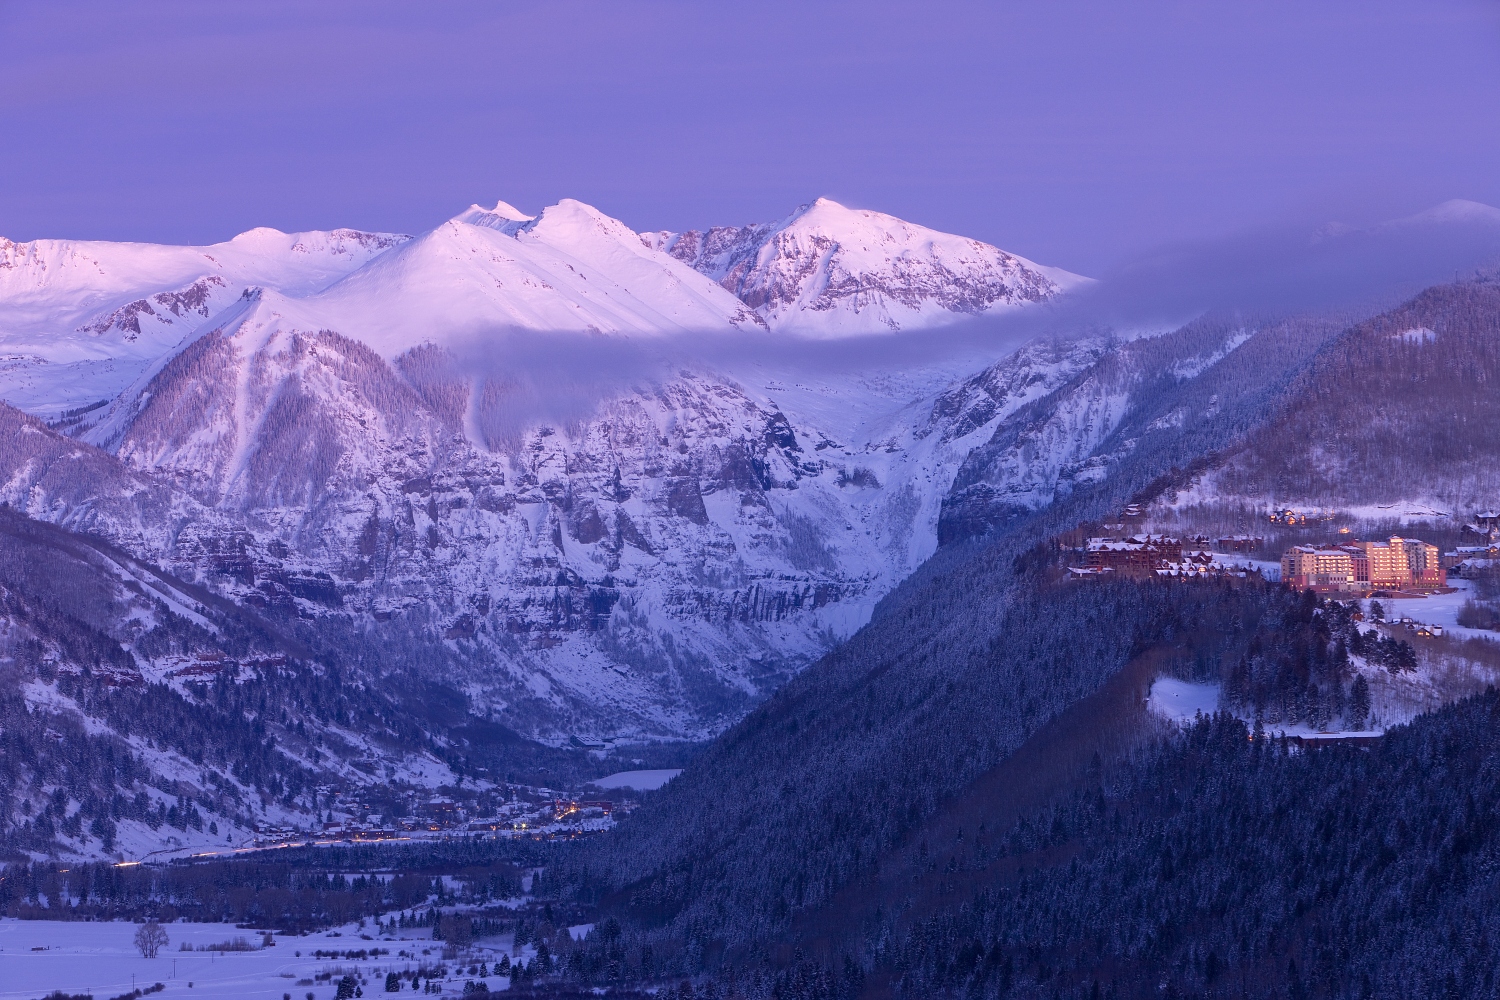 Telluride ski resort Colorado USA CREDIT iStock